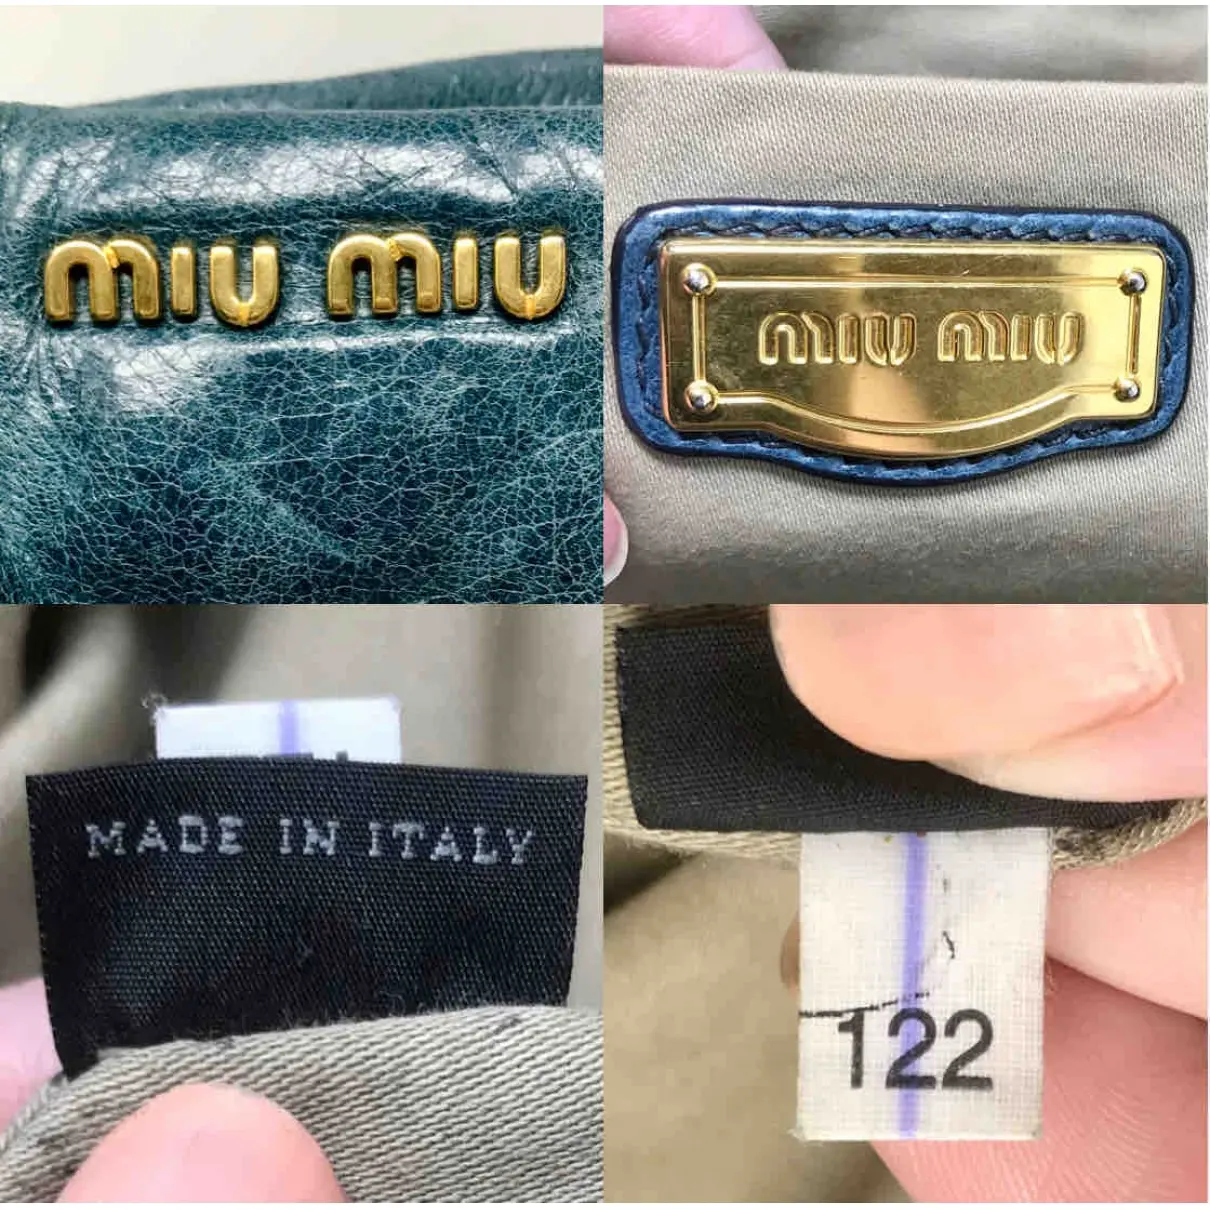 Miu Miu Leather handbag for sale